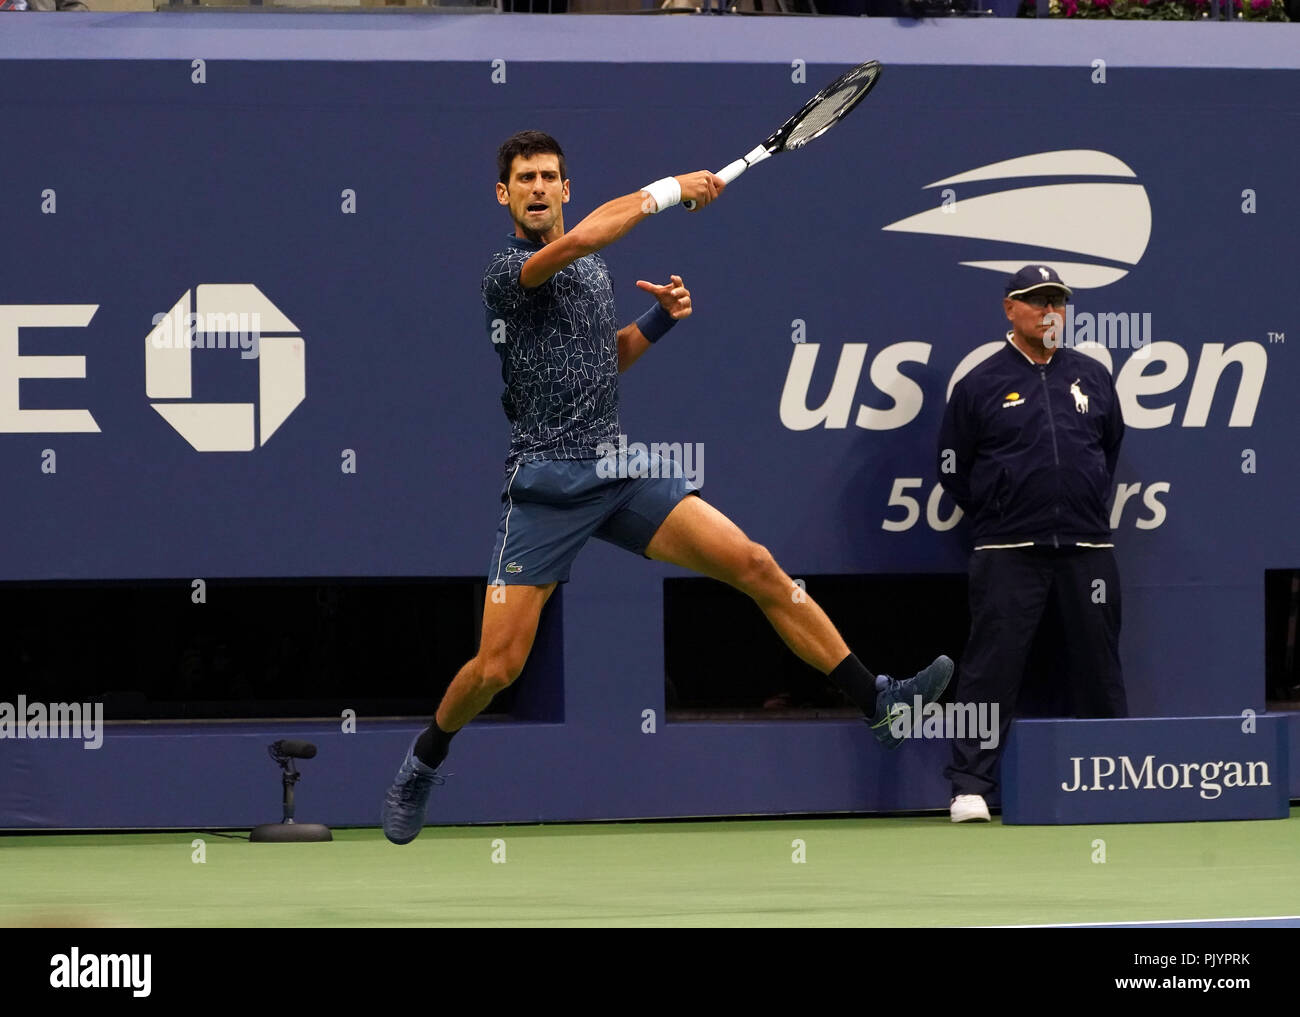 Flushing Meadows, New York, USA. September 9, 2018: US Open Tennis: Novak  Djokovic of Serbia hits a forehand return against Juan Martin del Potro in  the men's final of the US Open.